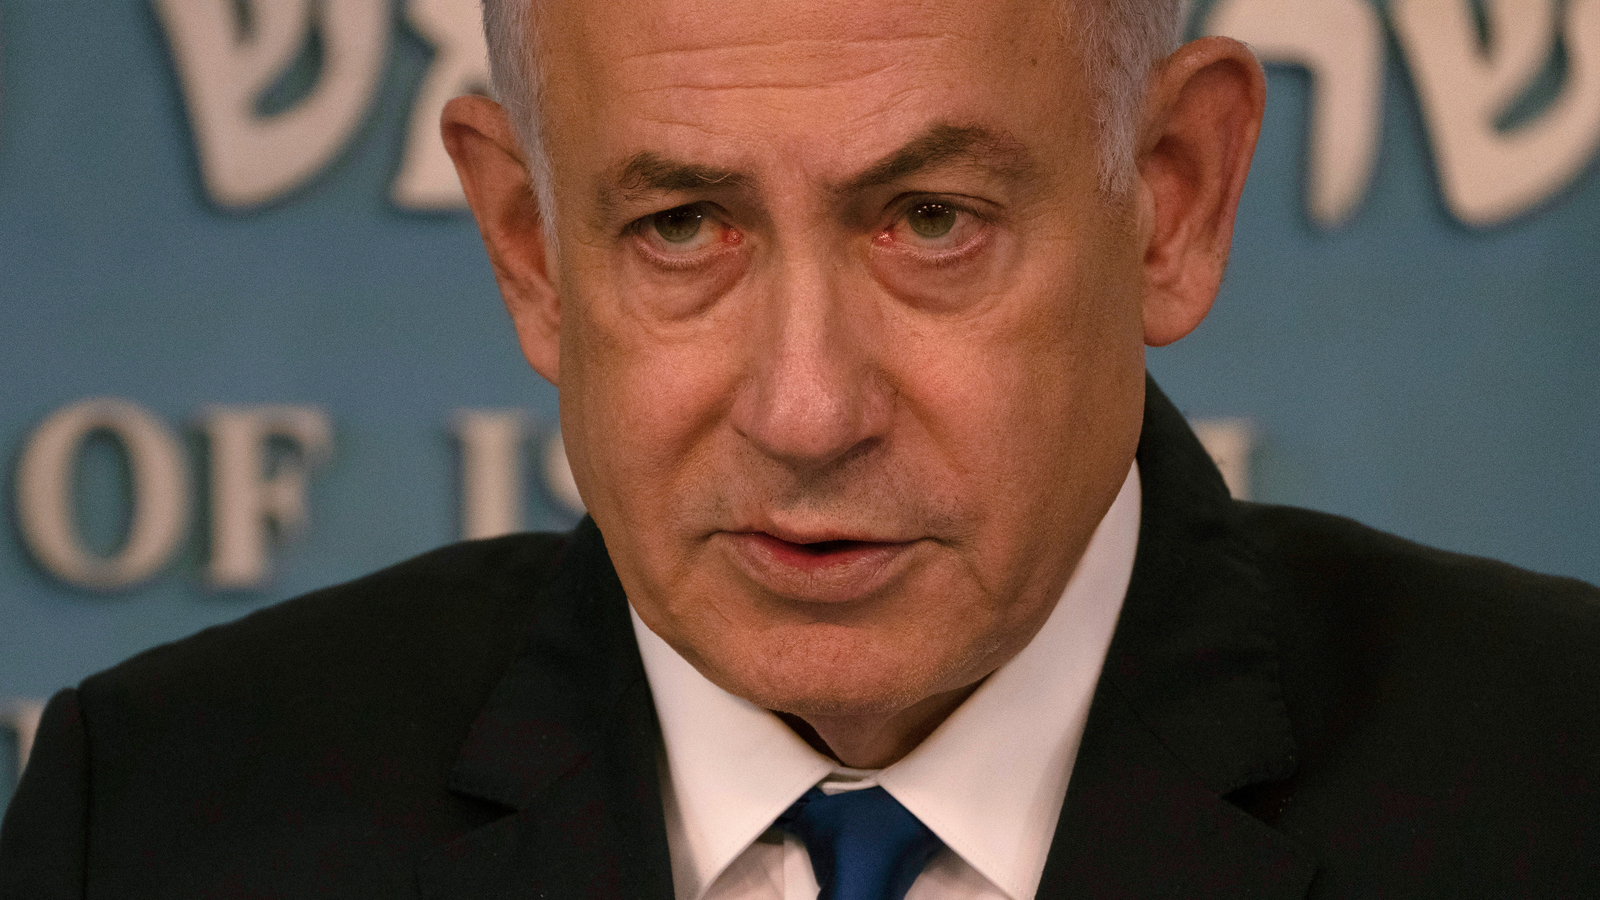 icc-prosecutor-seeks-arrest-warrant-for-israeli-and-hamas-leaders,-including-netanyahu